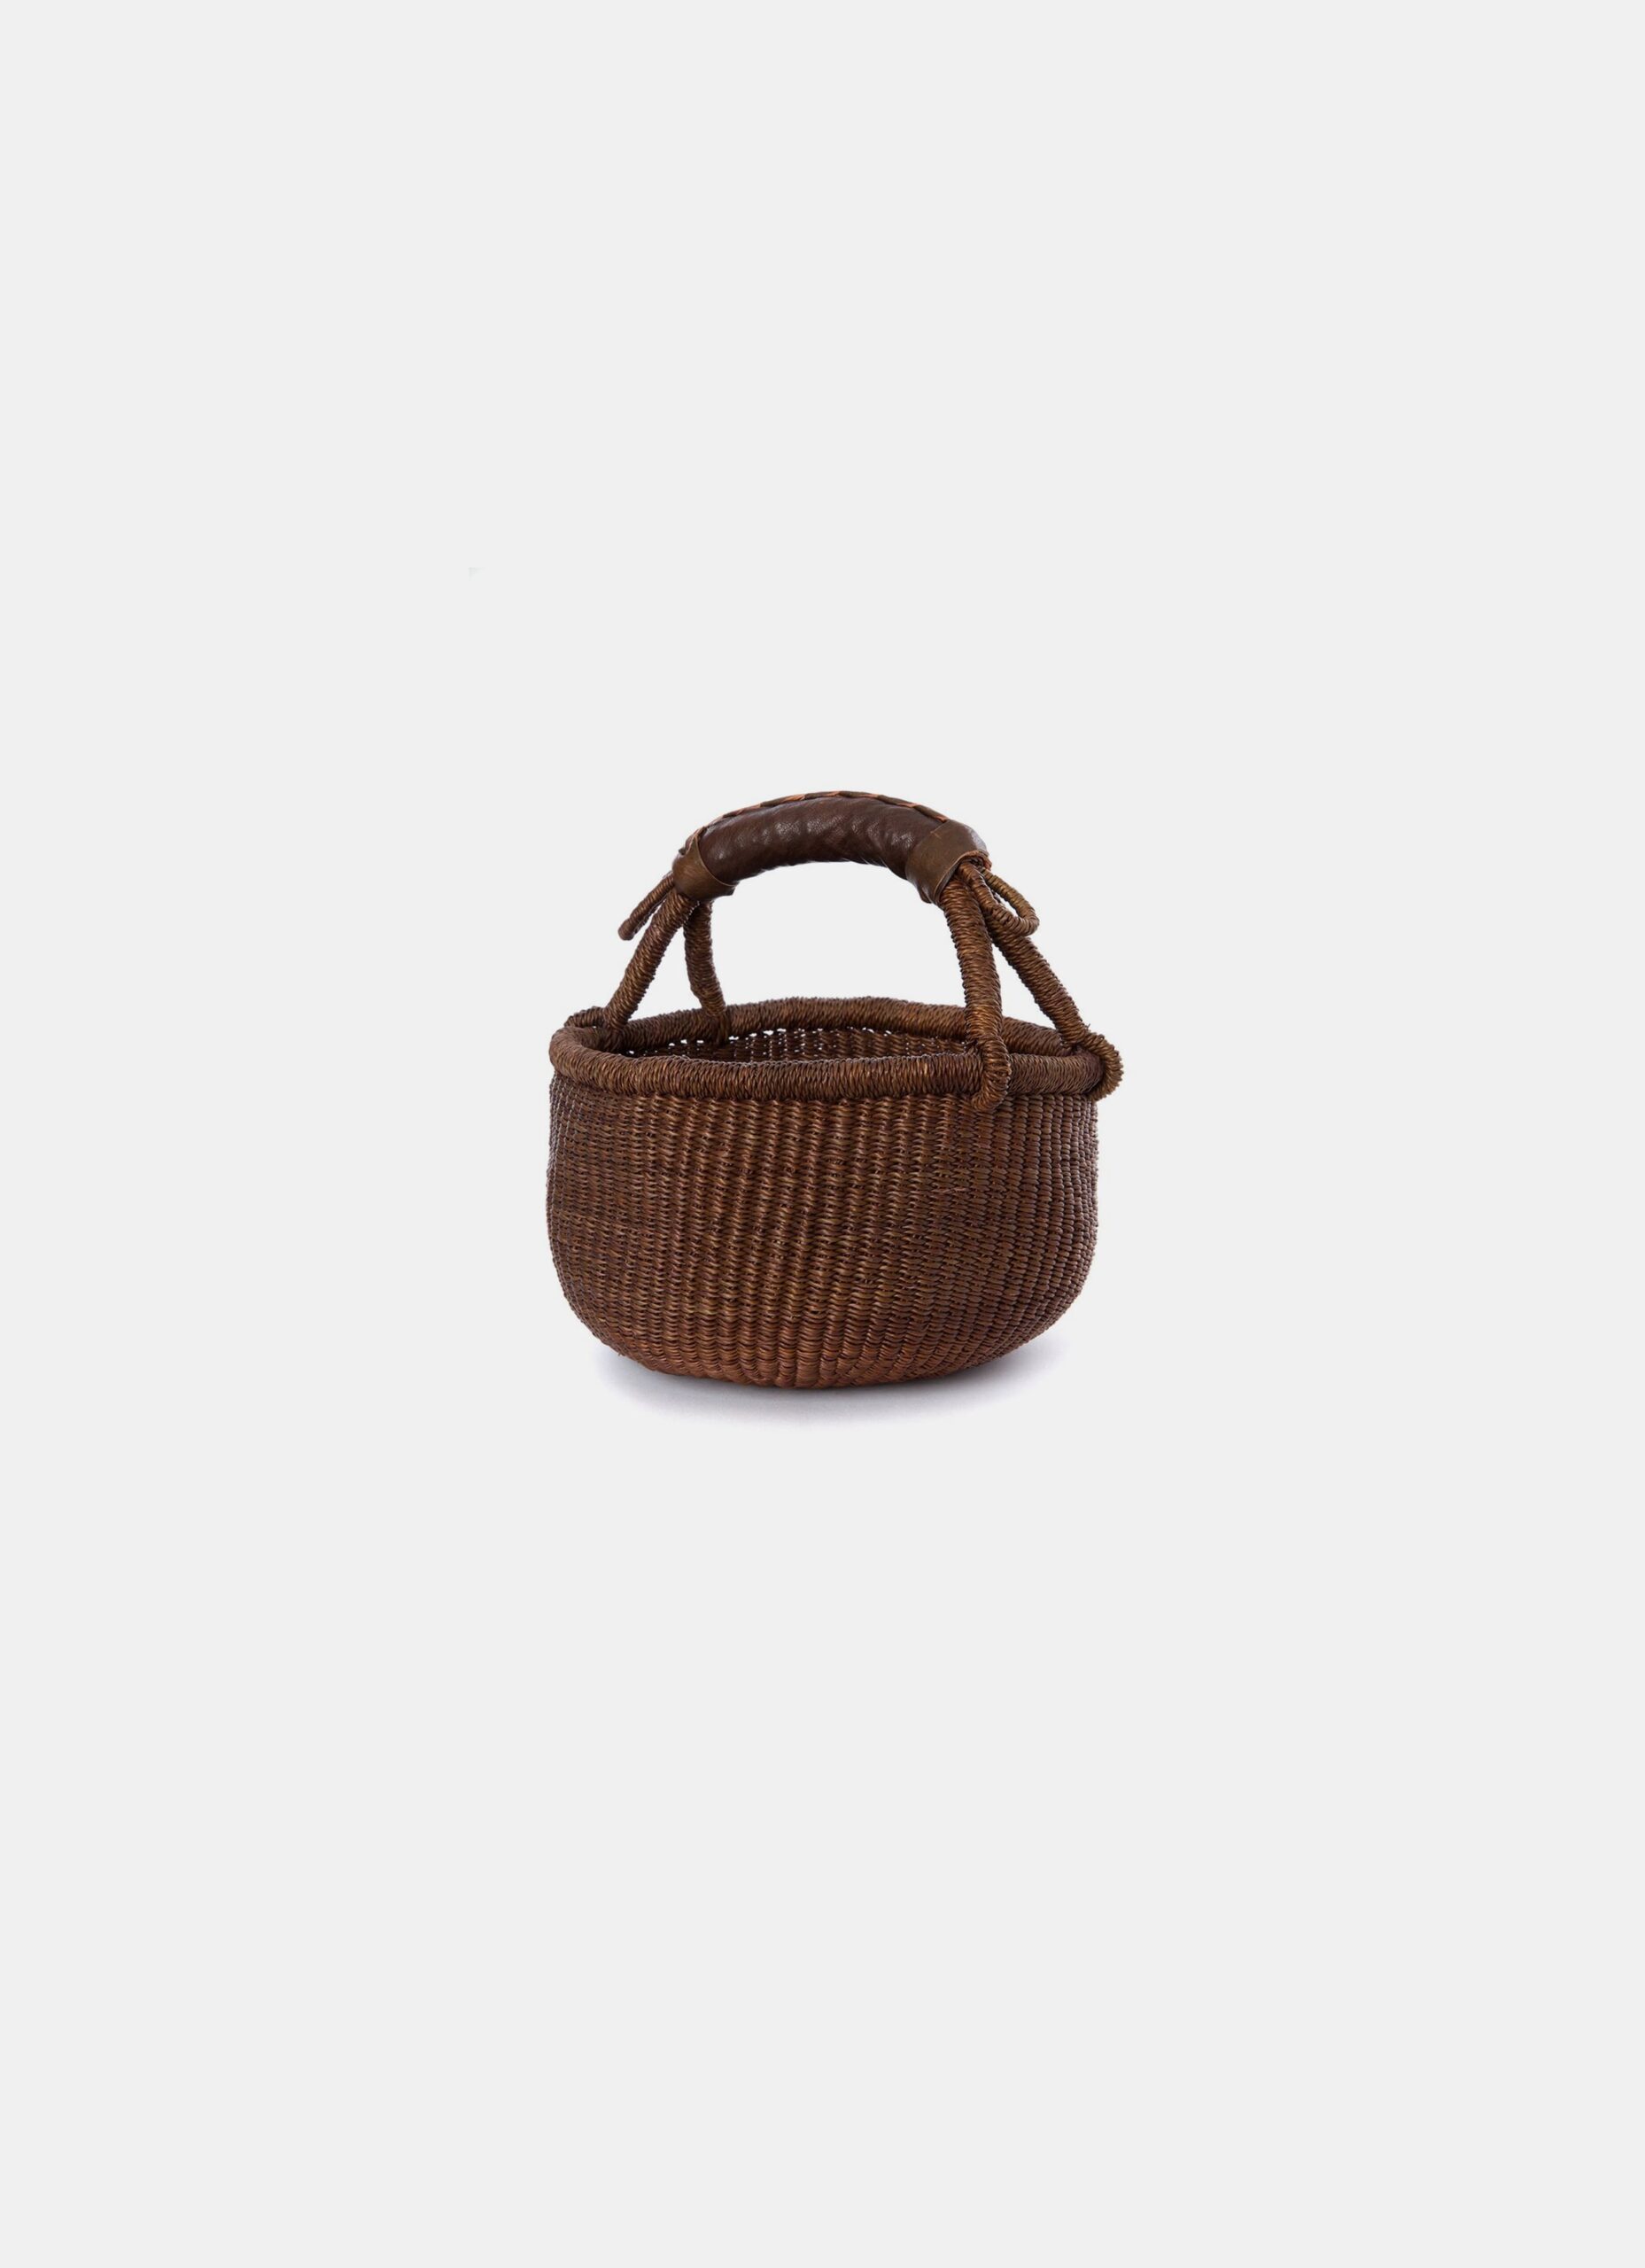 Handwoven African Basket - Mini Bolga basket - Dark brown